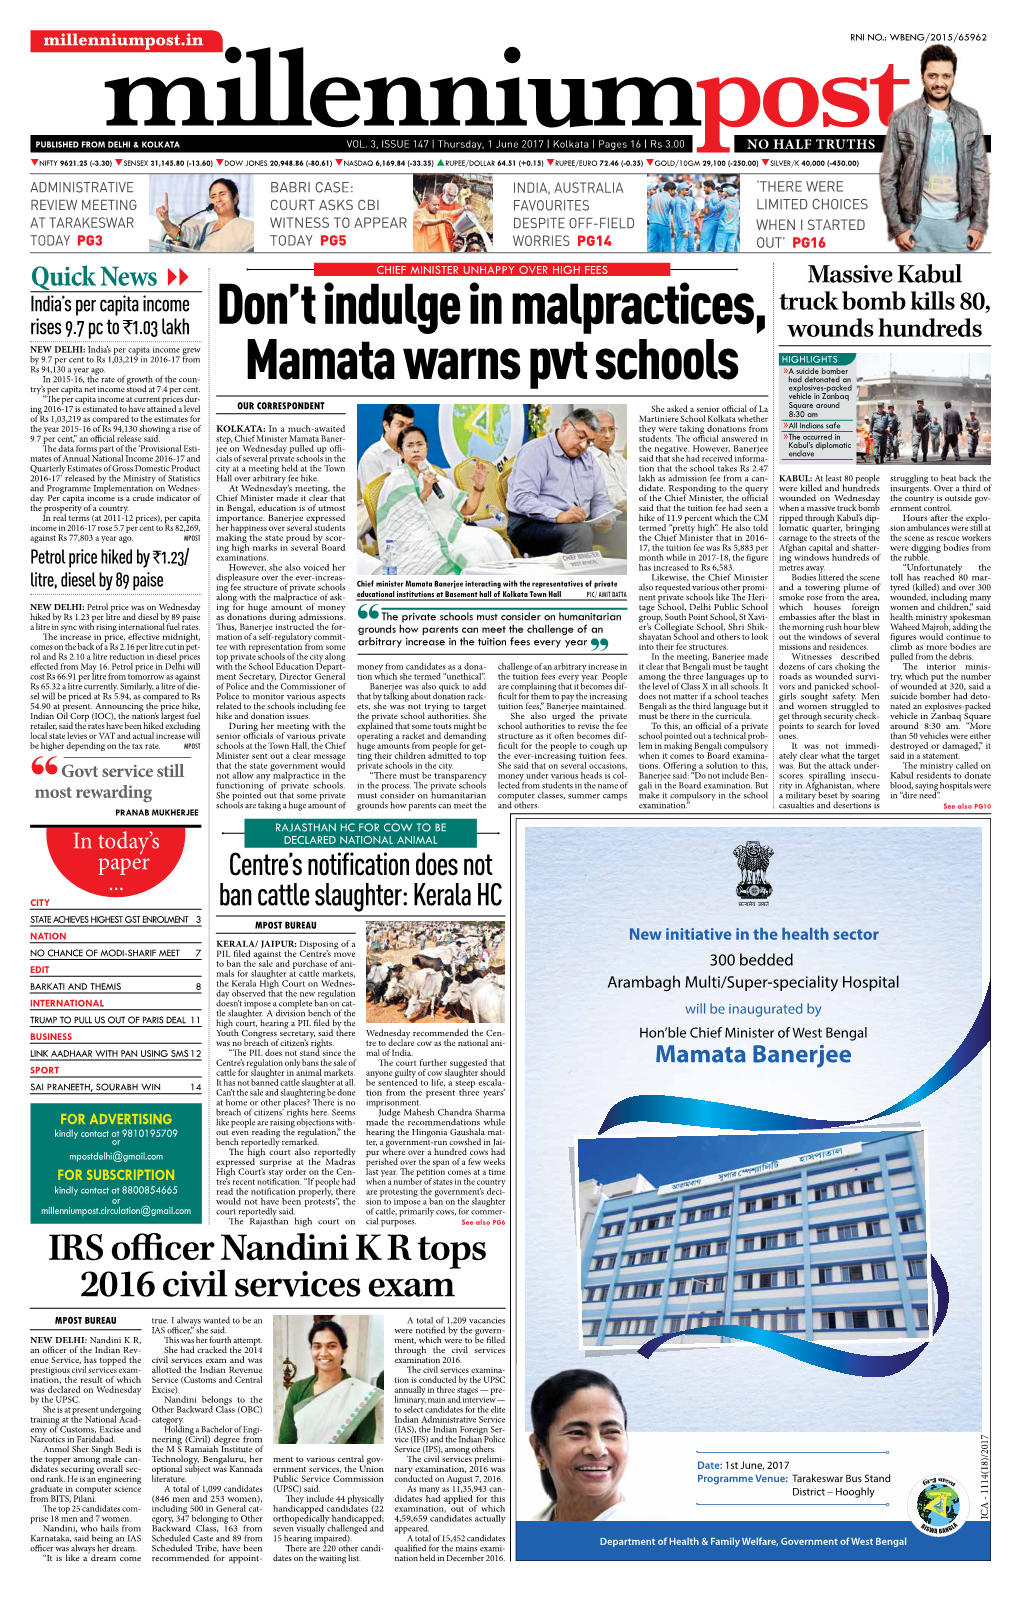 Don't Indulge in Malpractices, Mamata Warns Pvt Schools